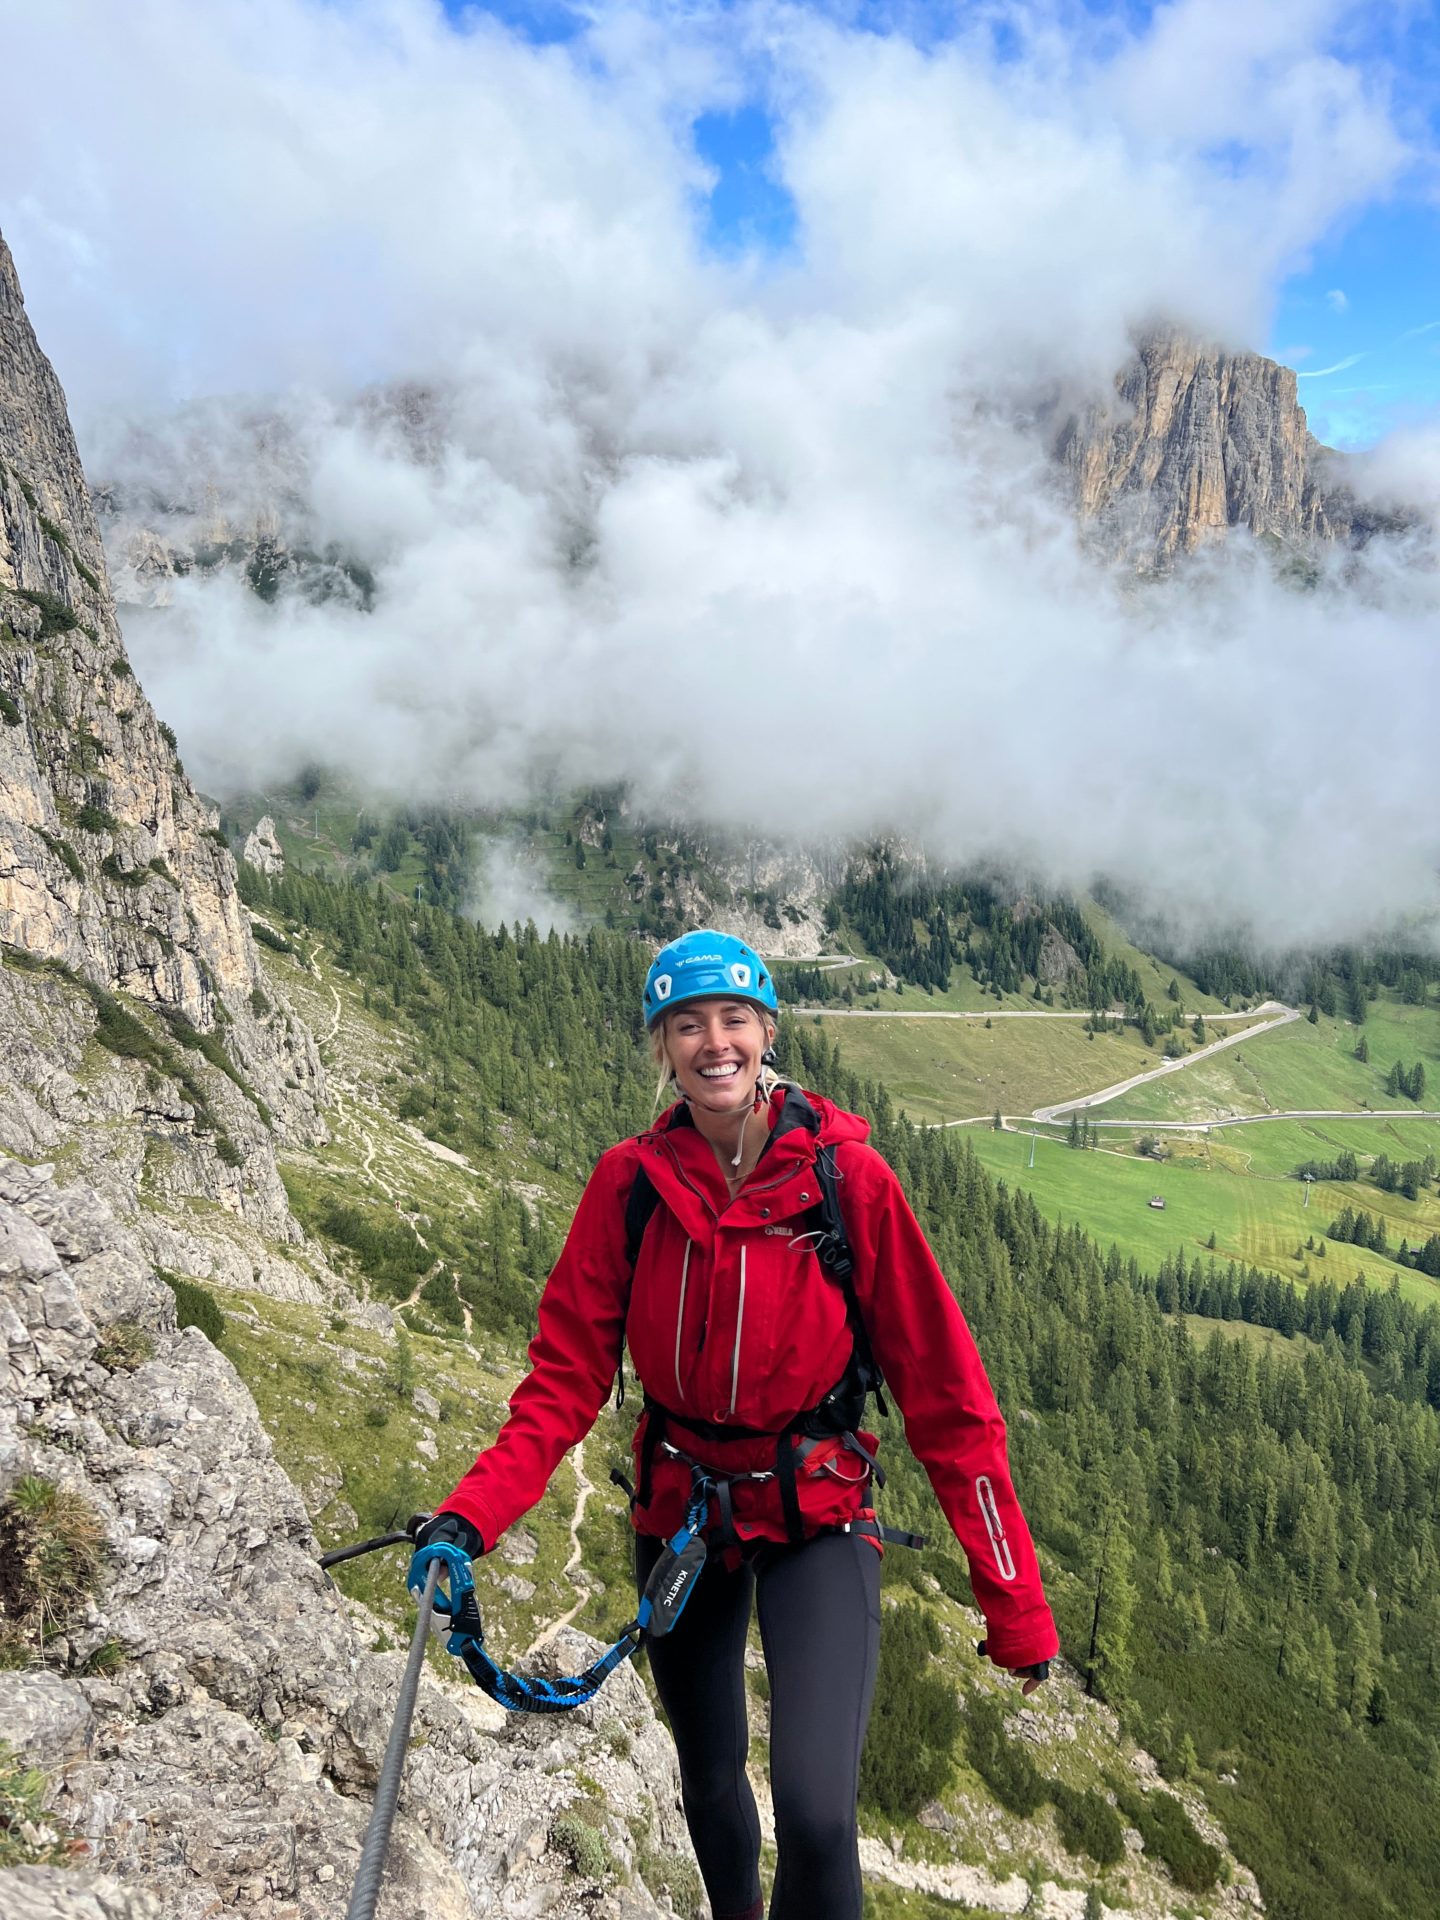 Zanna van Dijk on a via ferrata in the Dolomites